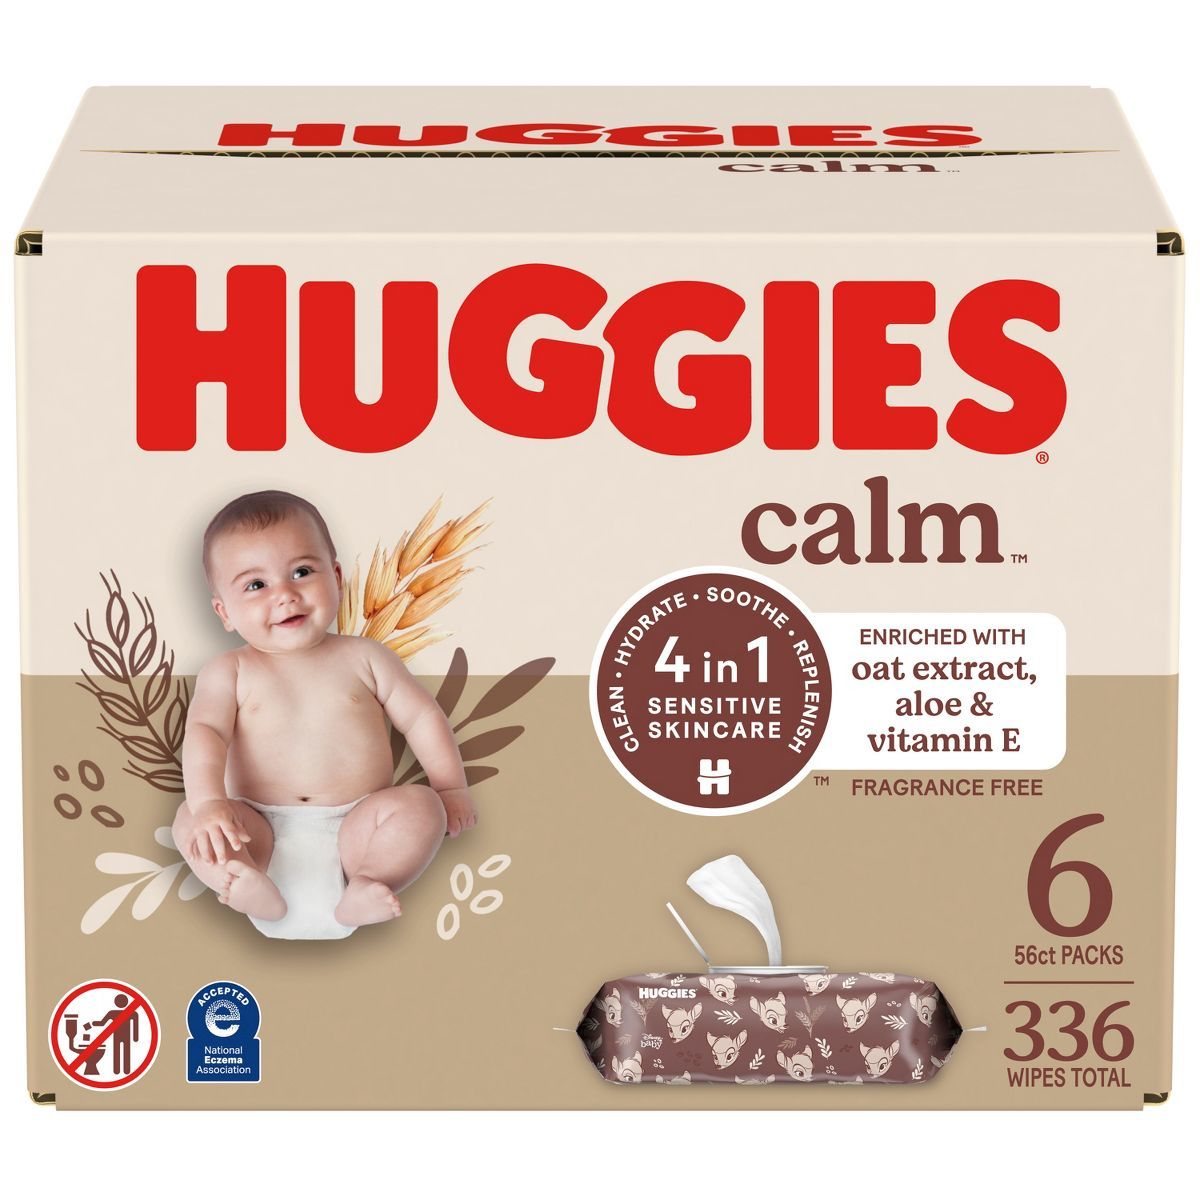 Huggies Calm Baby Wipes - 336ct | Target